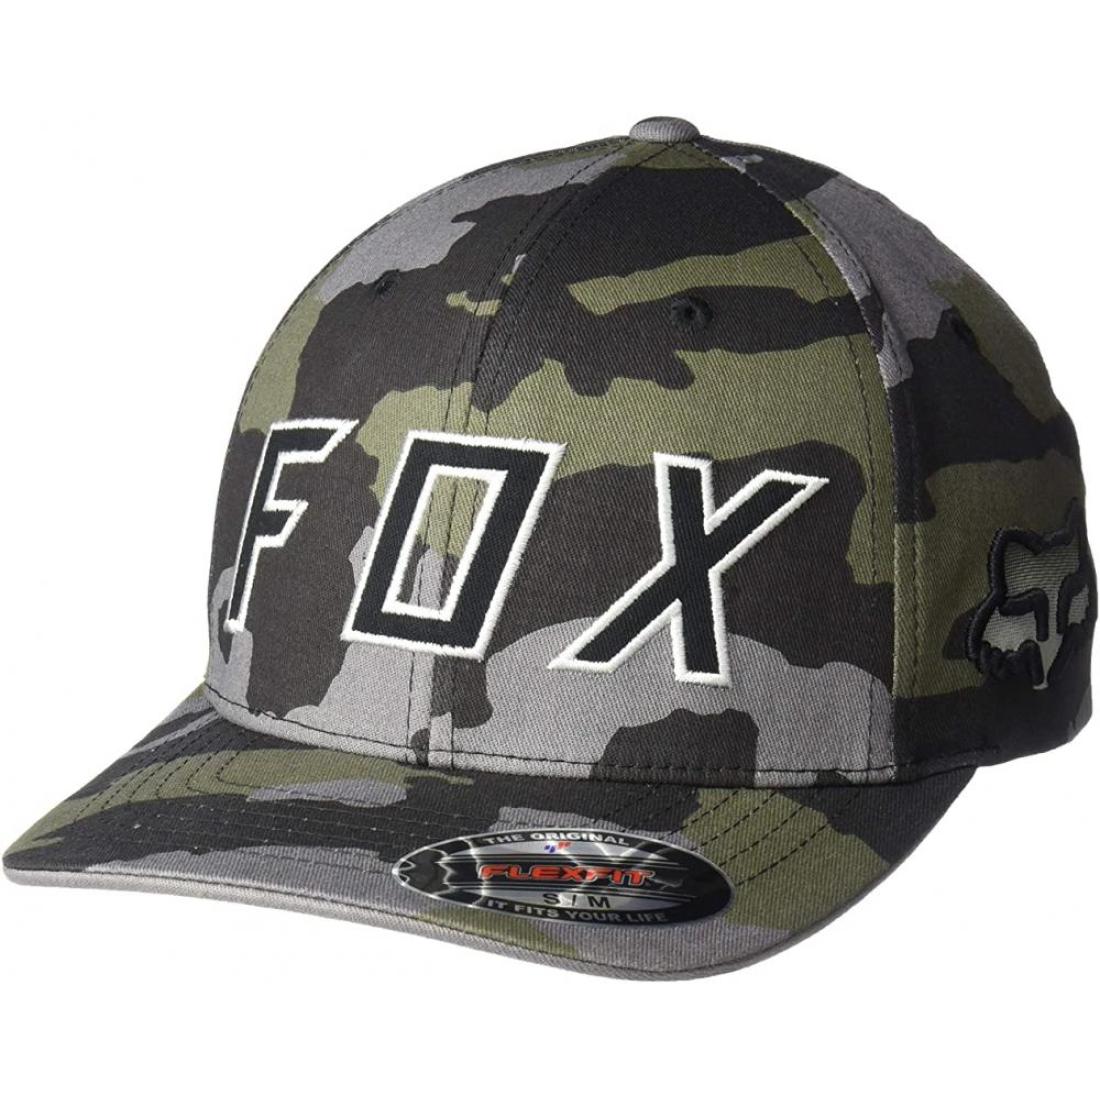 Scramble Flexfit Hat Camo